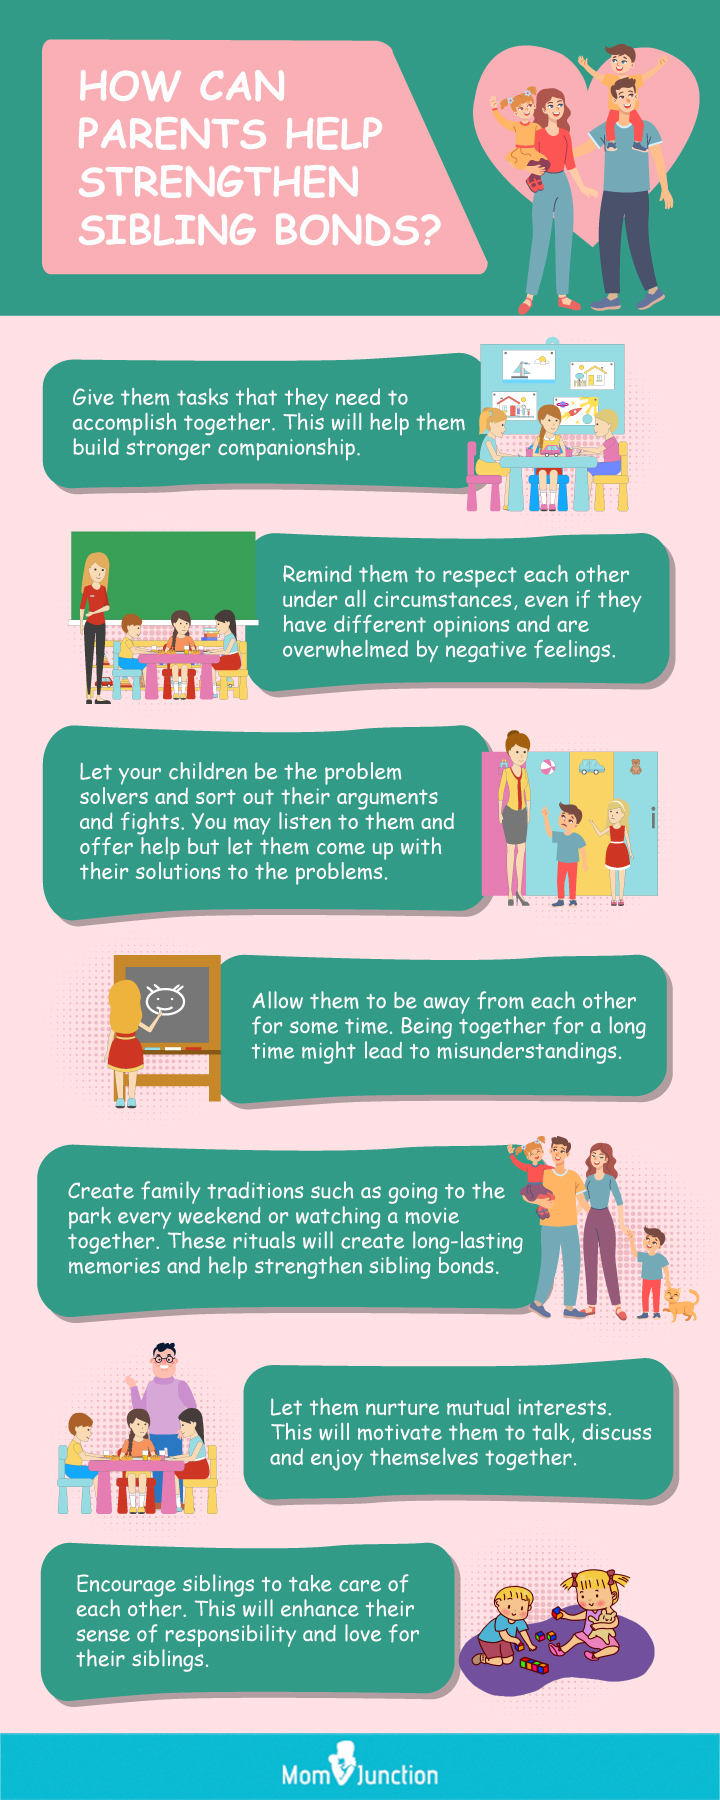 how can parents helpstrengthen sibling bonds [infographic]